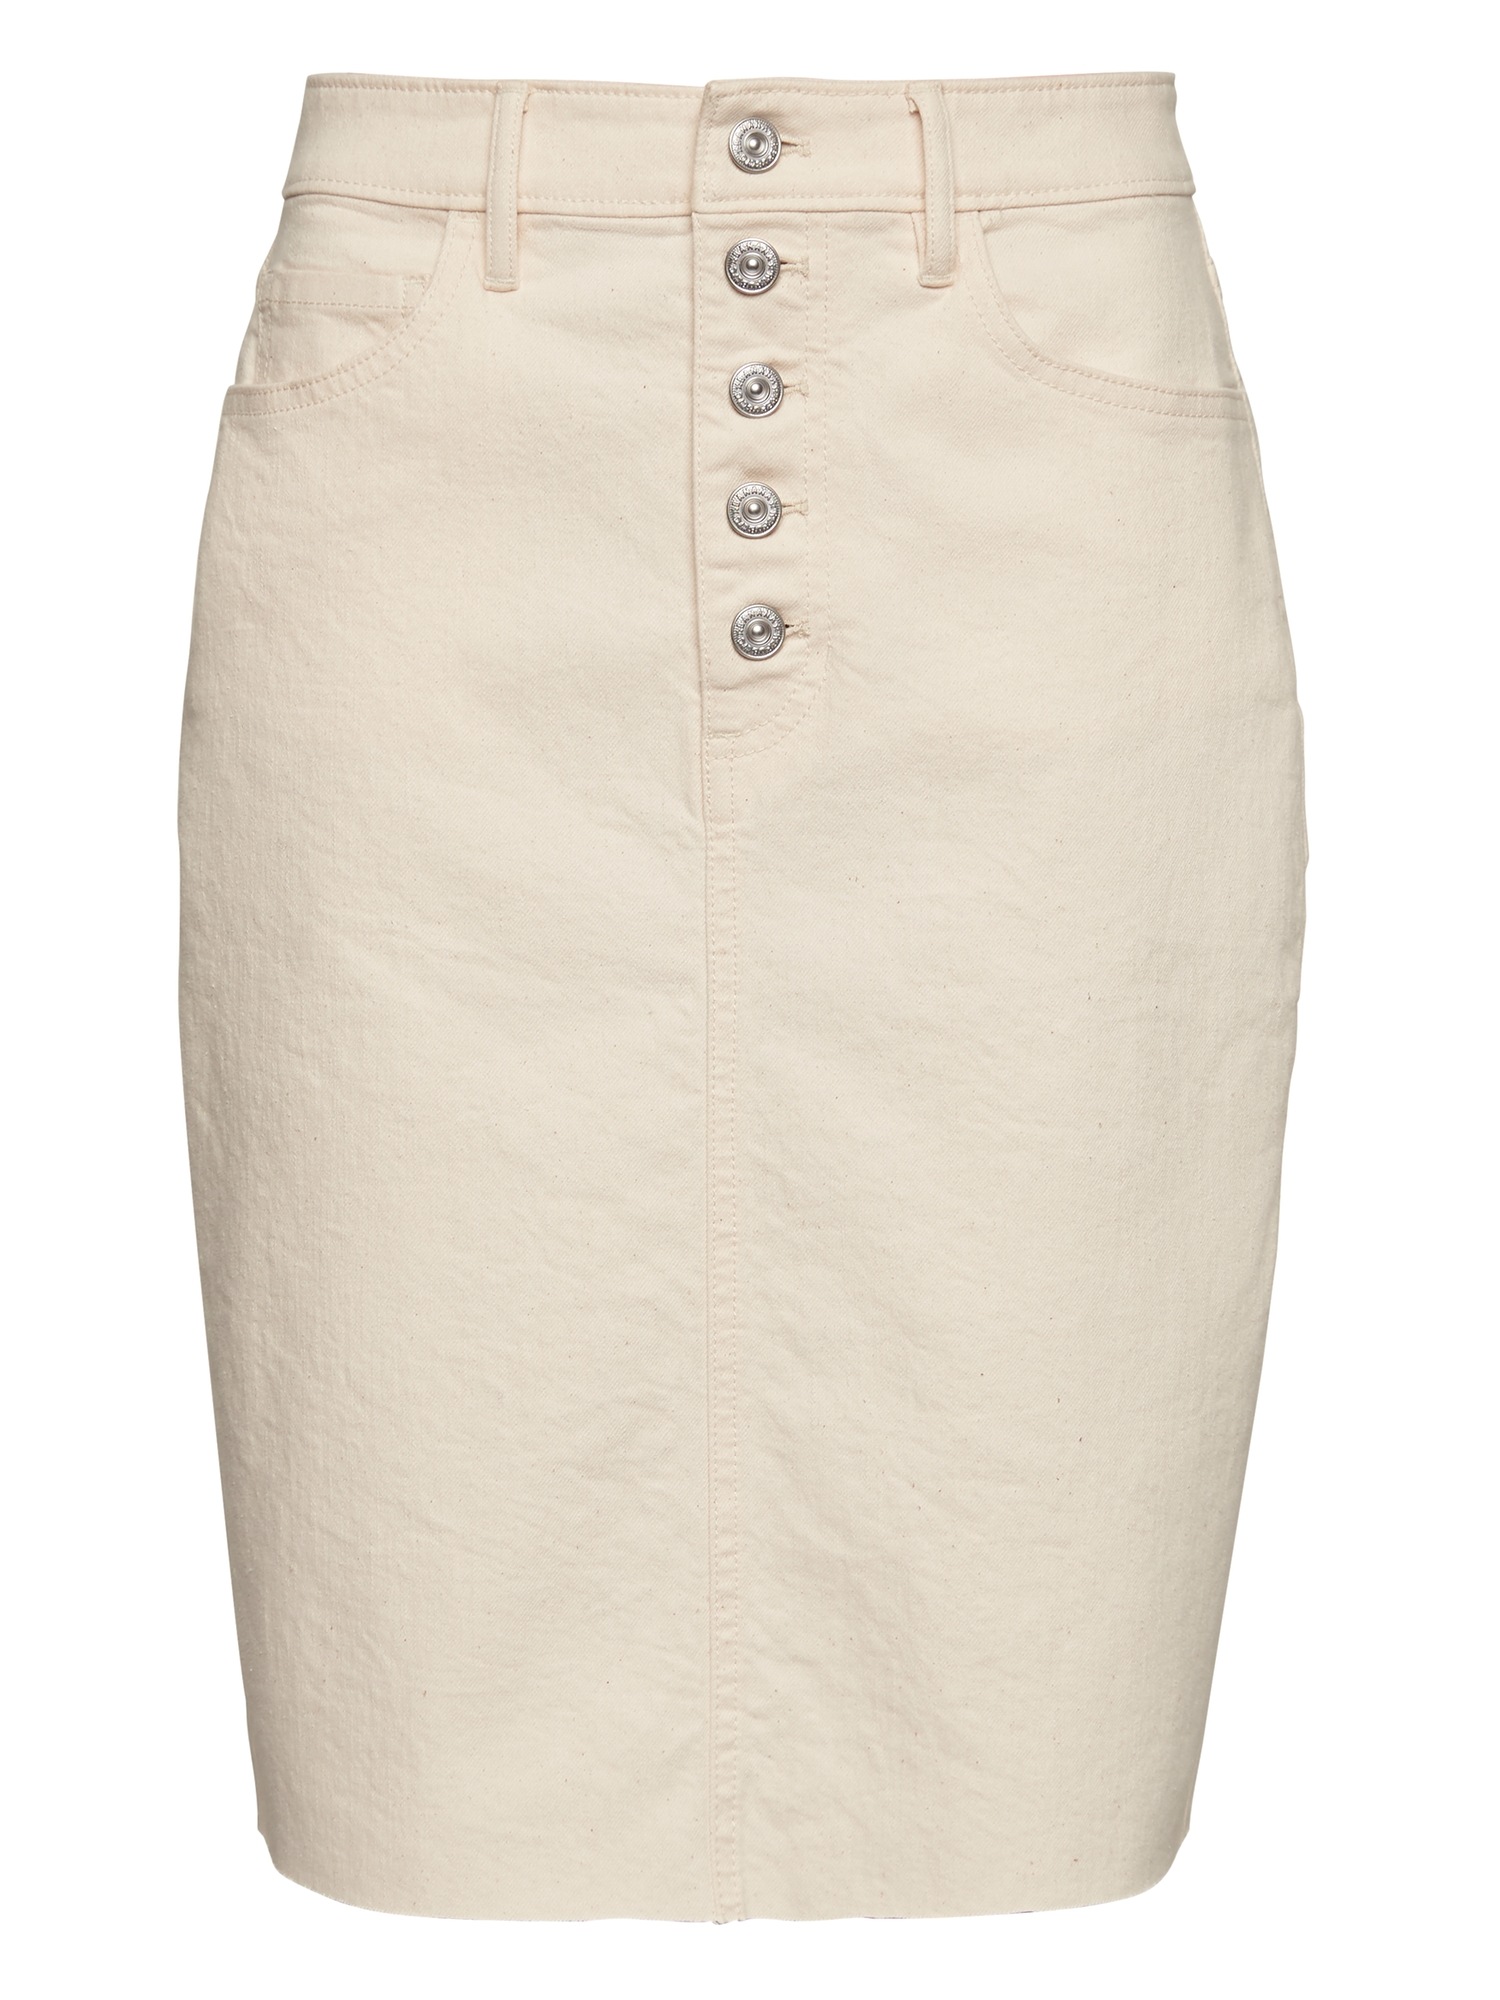 Petite Button-Fly Denim Skirt